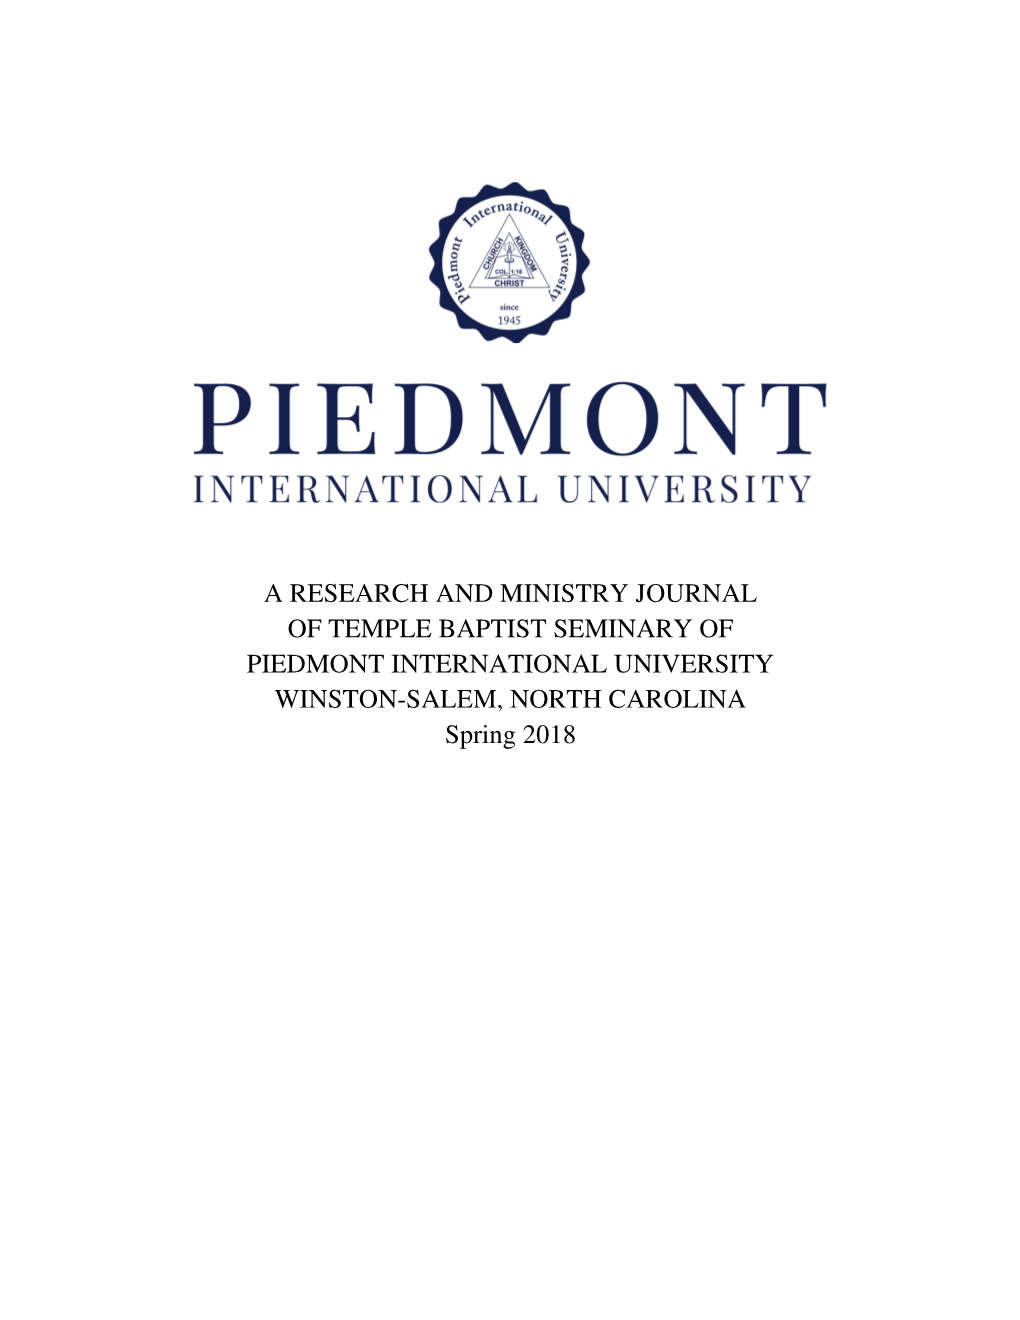 A RESEARCH and MINISTRY JOURNAL of TEMPLE BAPTIST SEMINARY of PIEDMONT INTERNATIONAL UNIVERSITY WINSTON-SALEM, NORTH CAROLINA Spring 2018